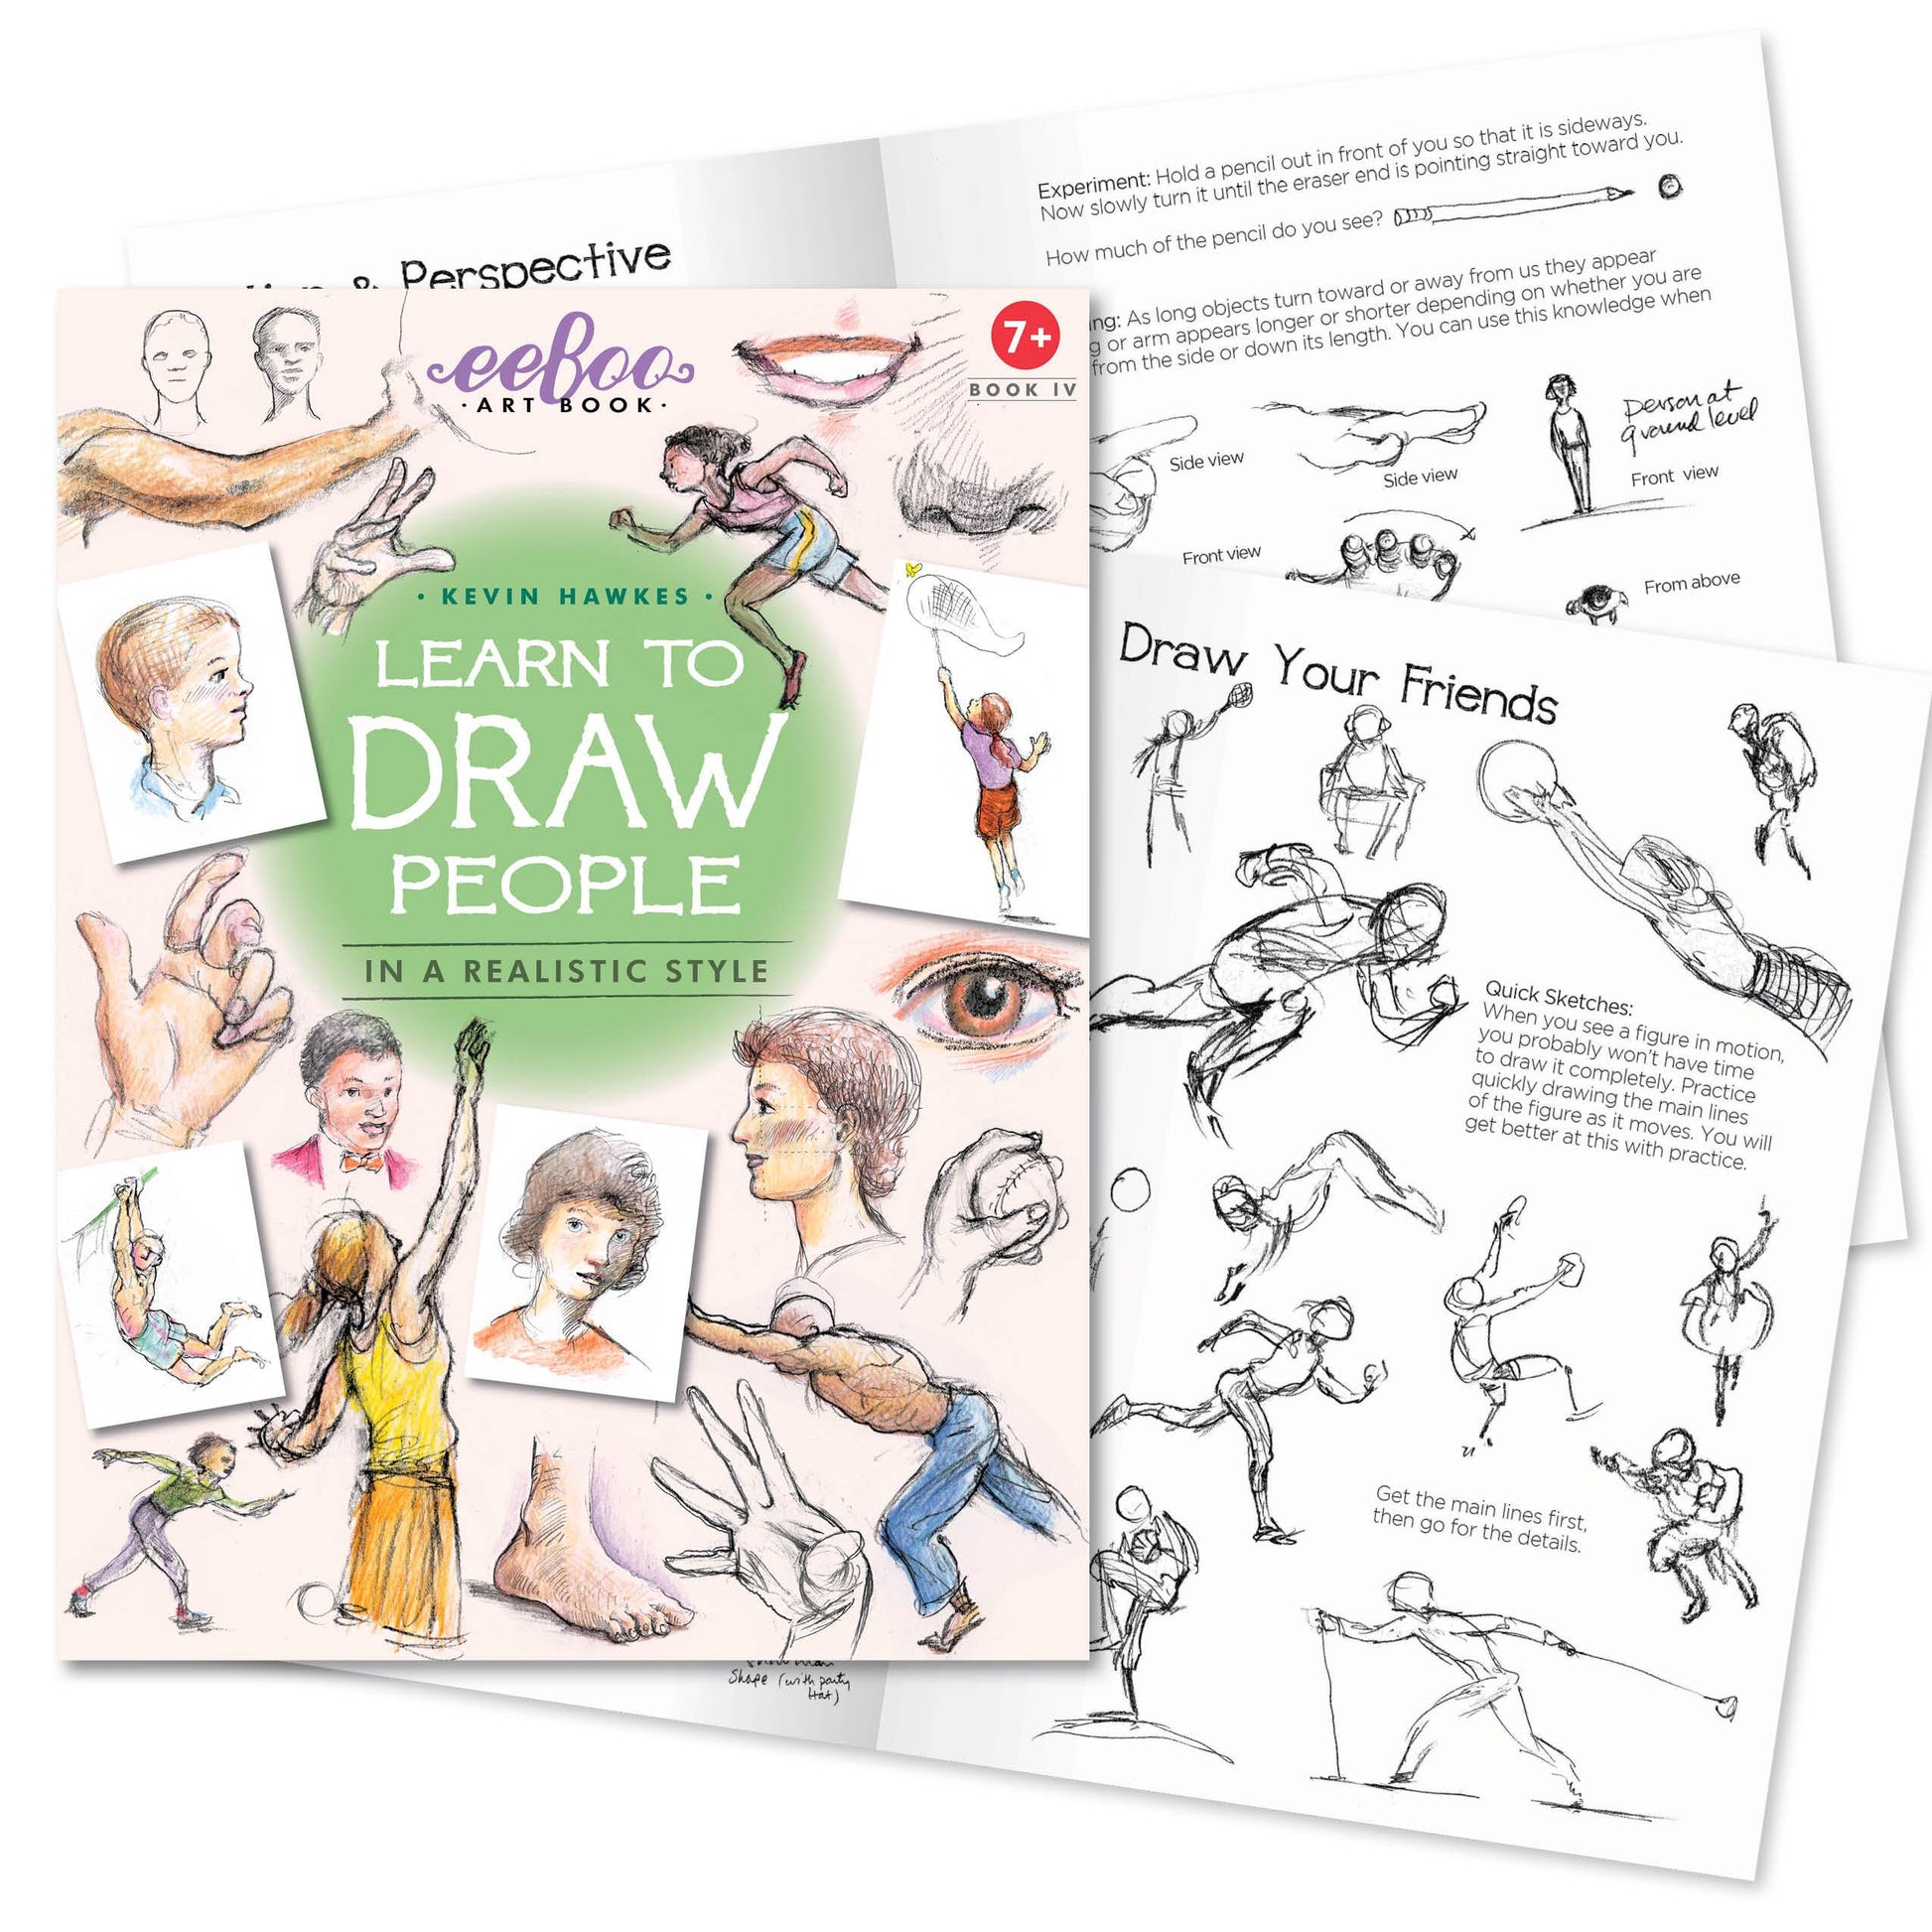 eeBoo Art Book 4 - Learn to Draw People The Toy Wagon